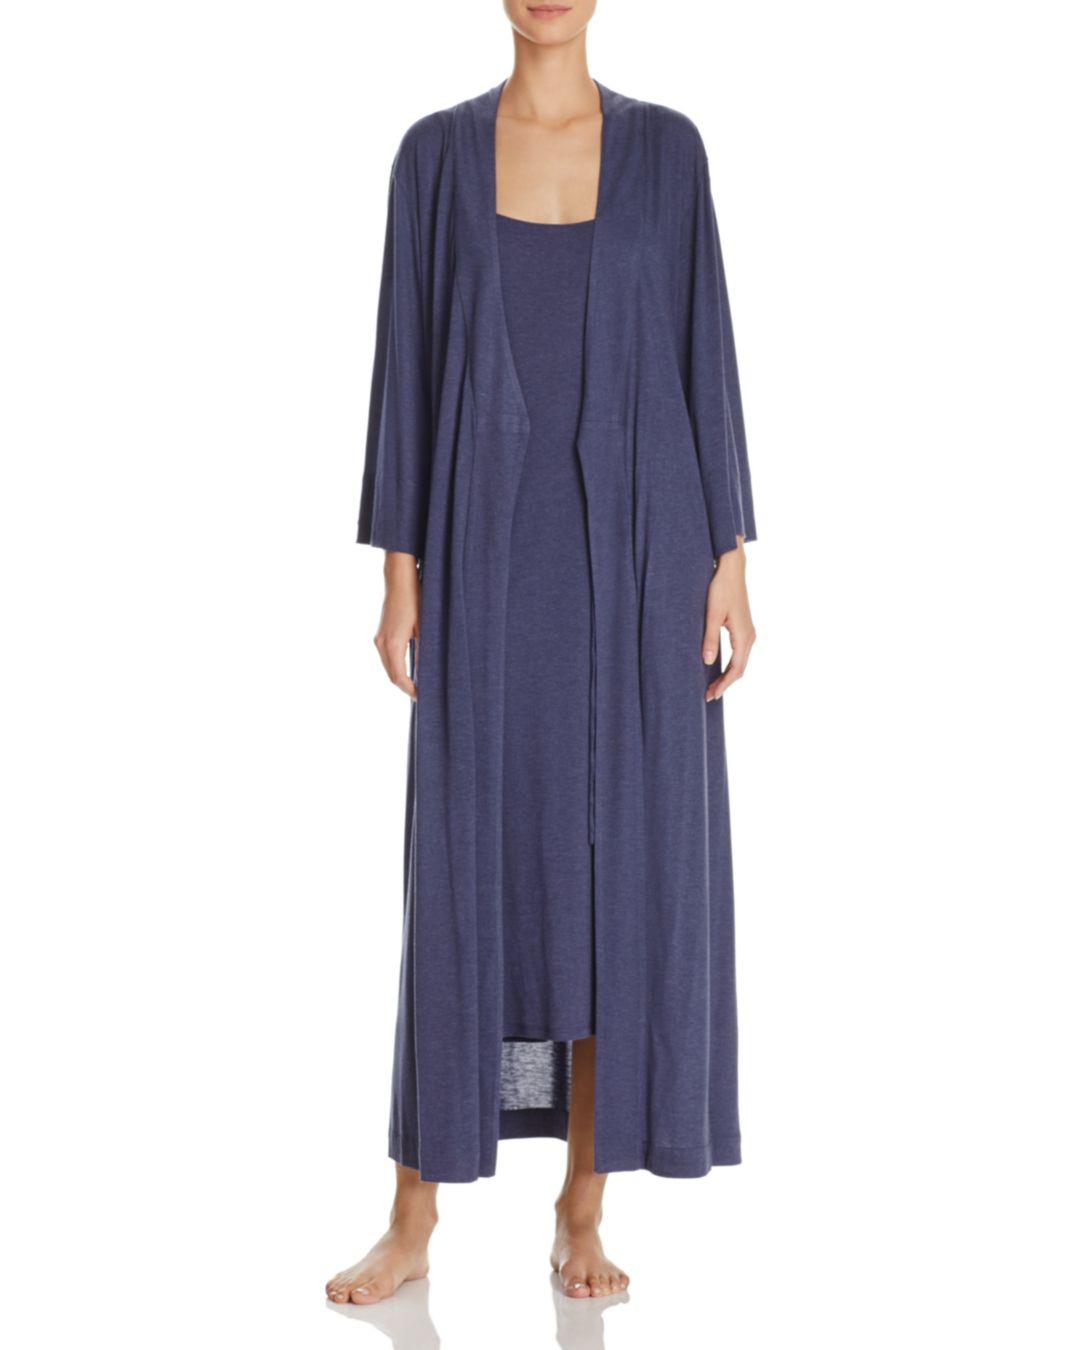 Natori Synthetic Shangri La Knit Robe in Heather Navy Blue (Blue) - Lyst